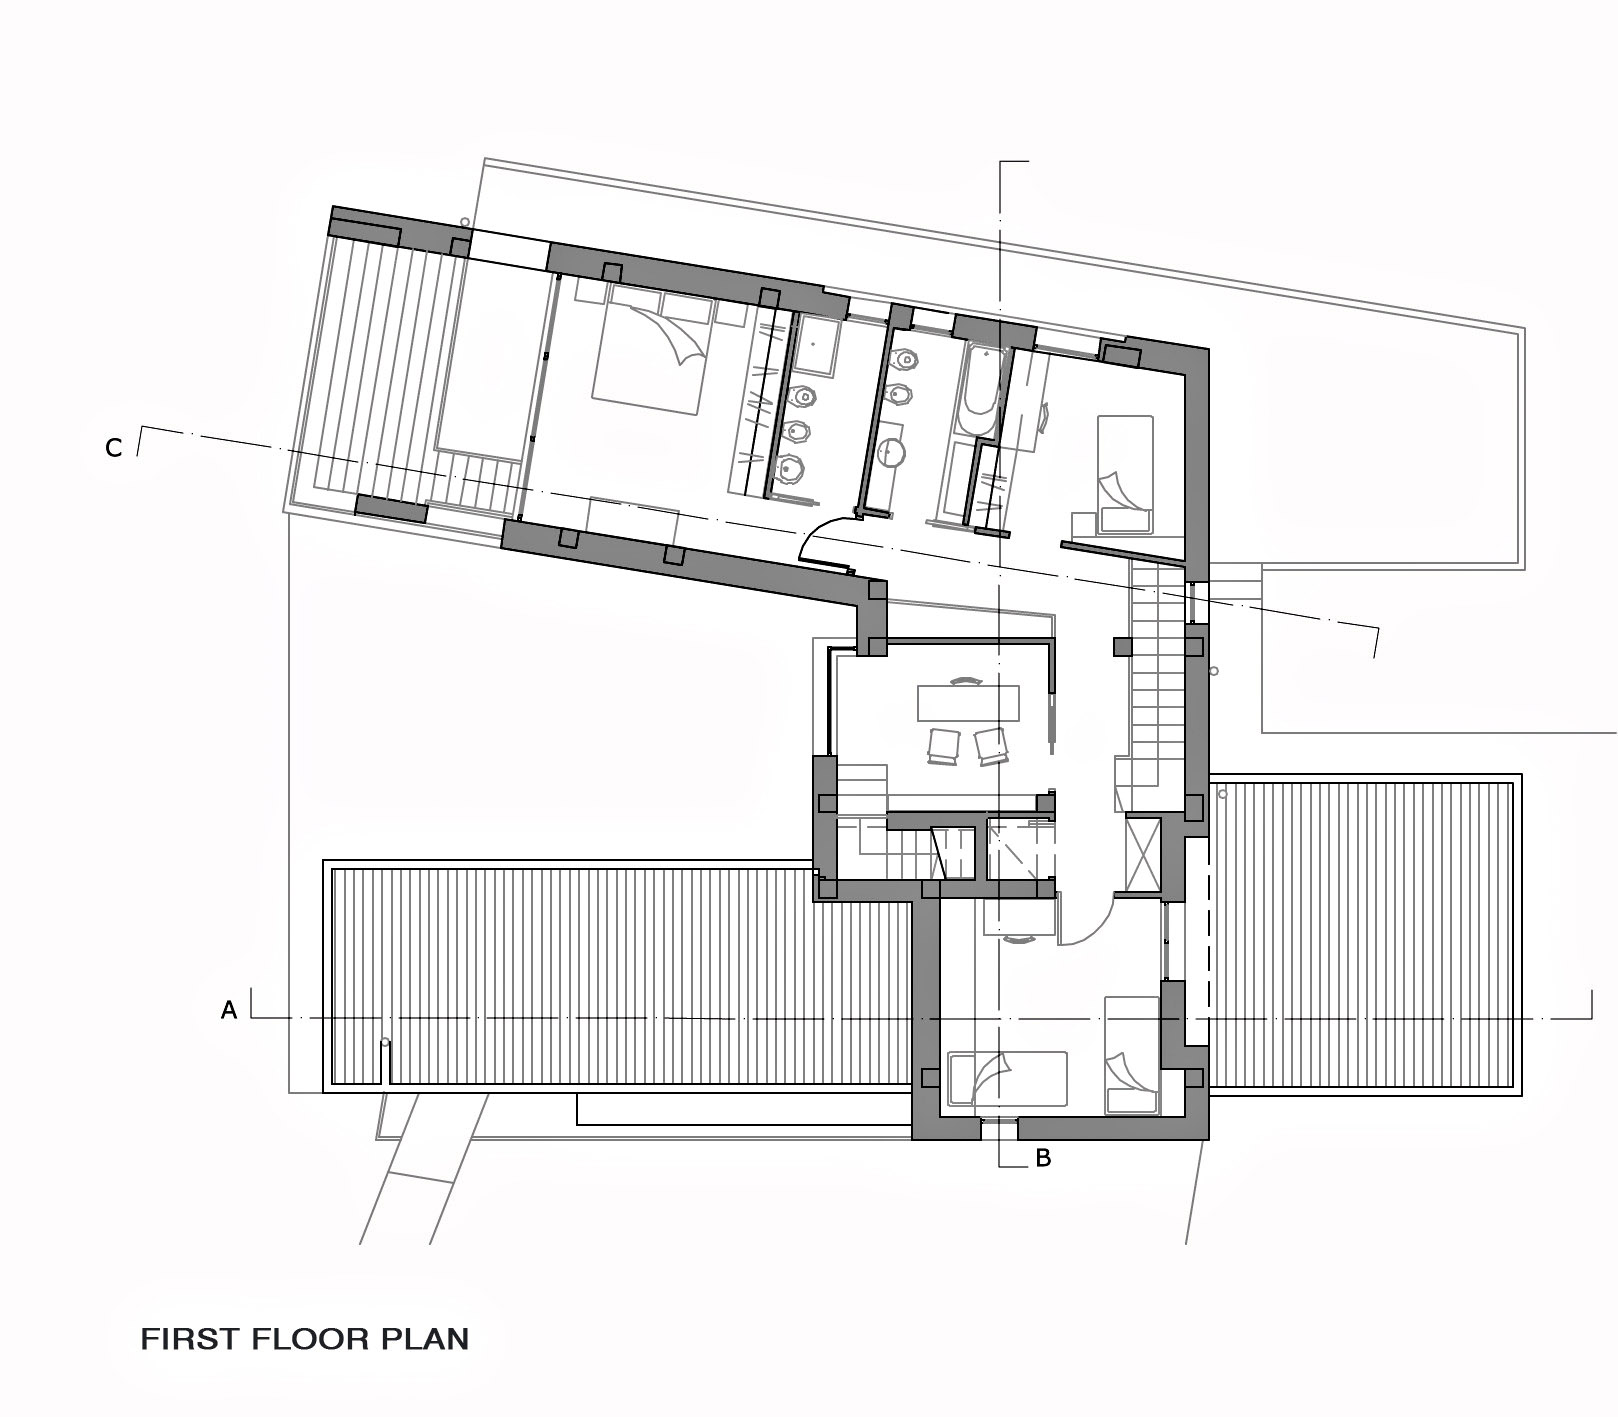 First Floor Plan - Villa Di Gioia Luxury Residence - Bisceglie, Apulia, Italy